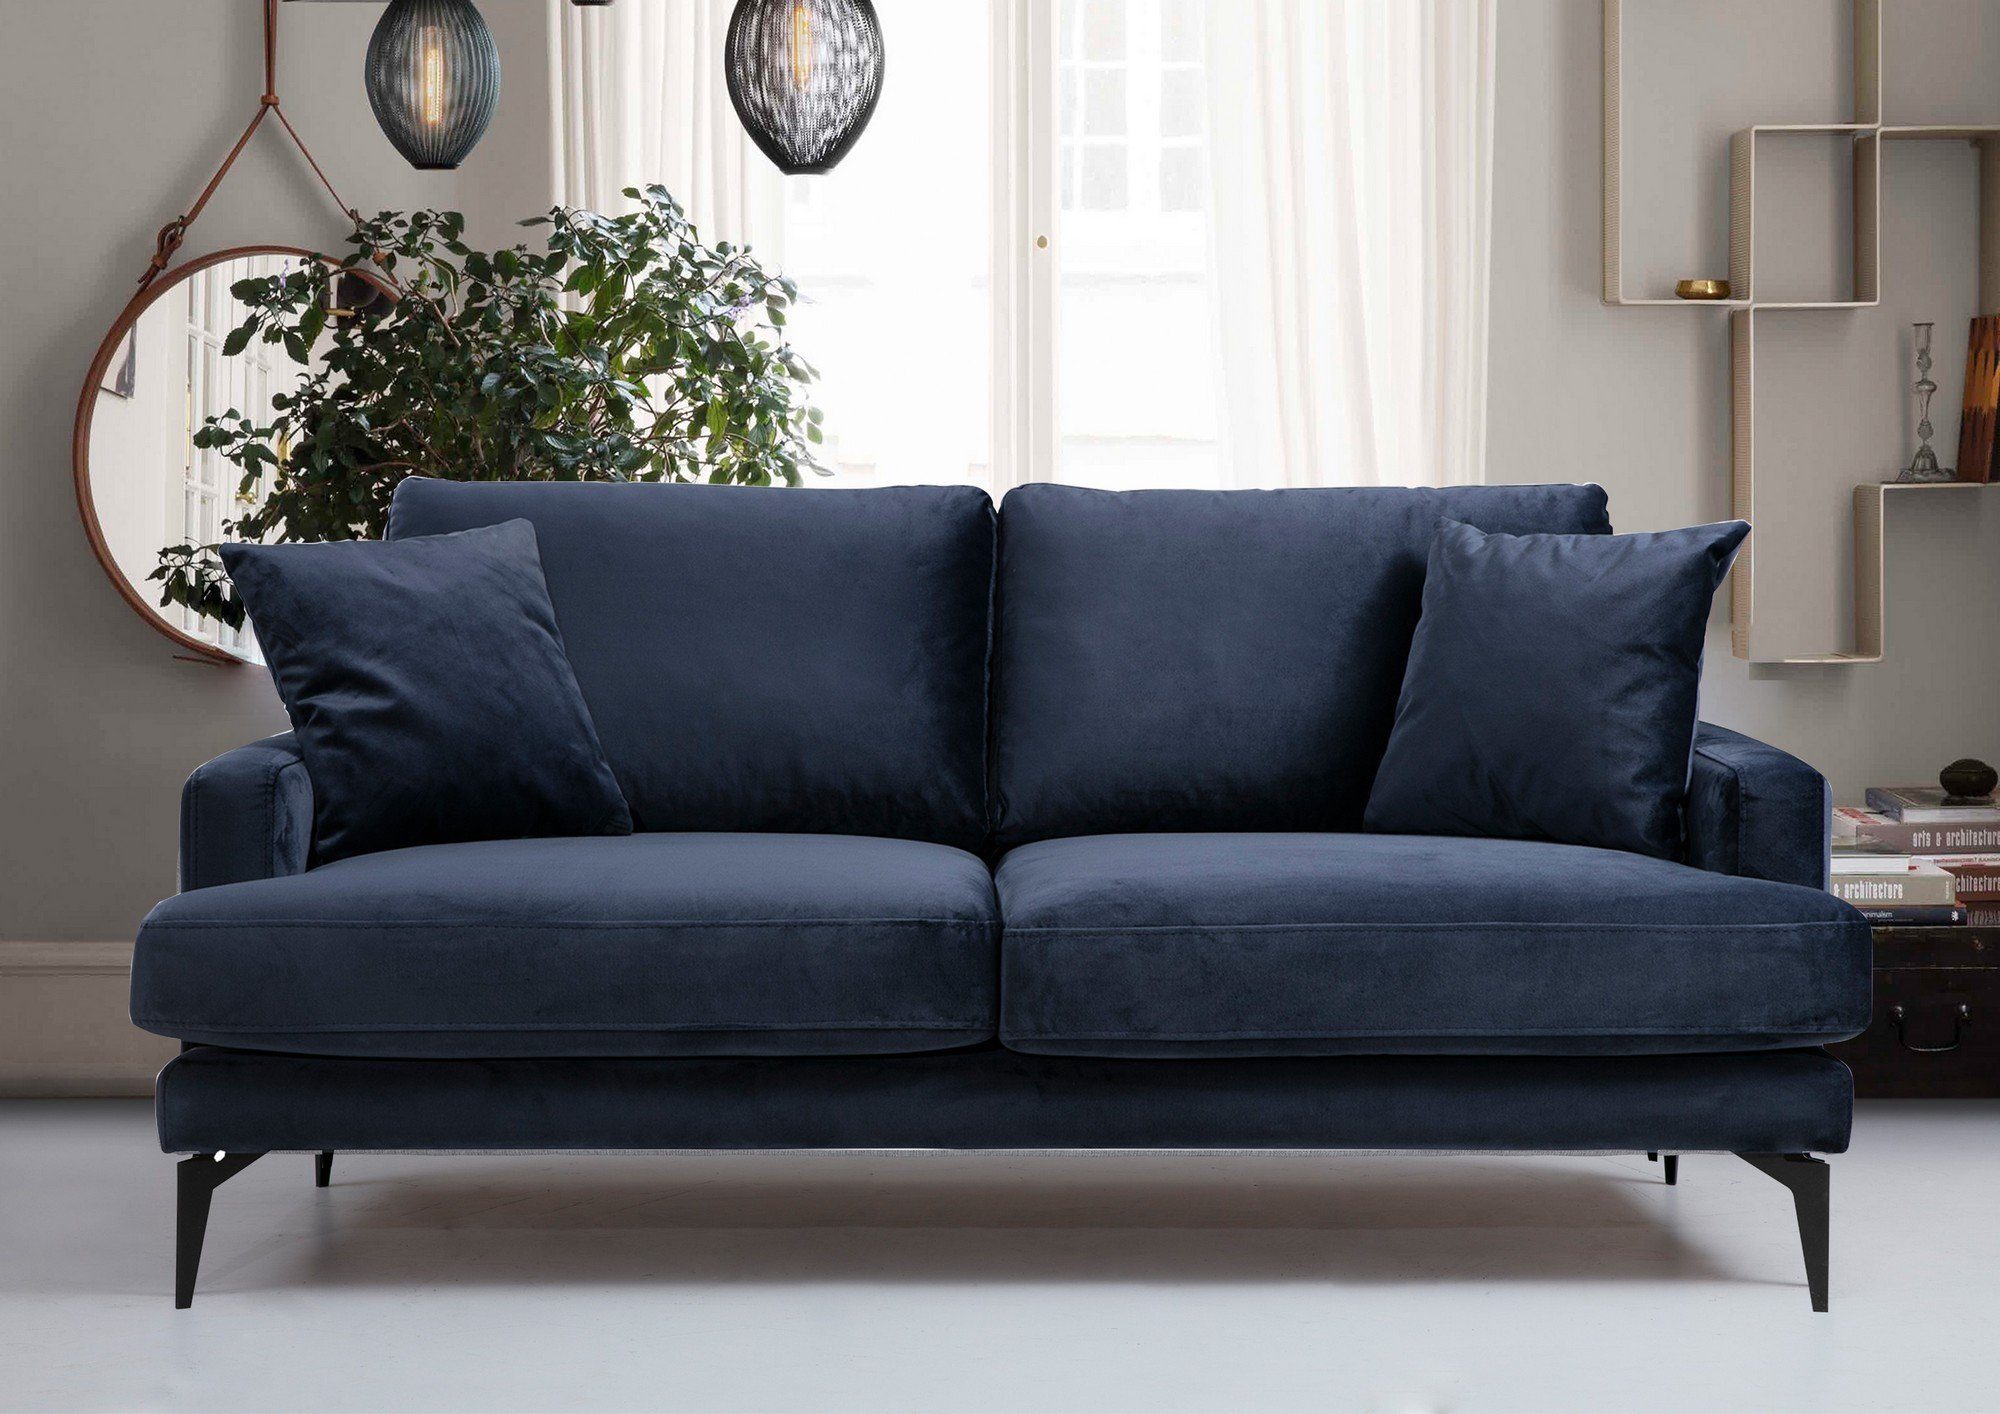 Skye Decor Sofa ARE1505 45 x 45 cm